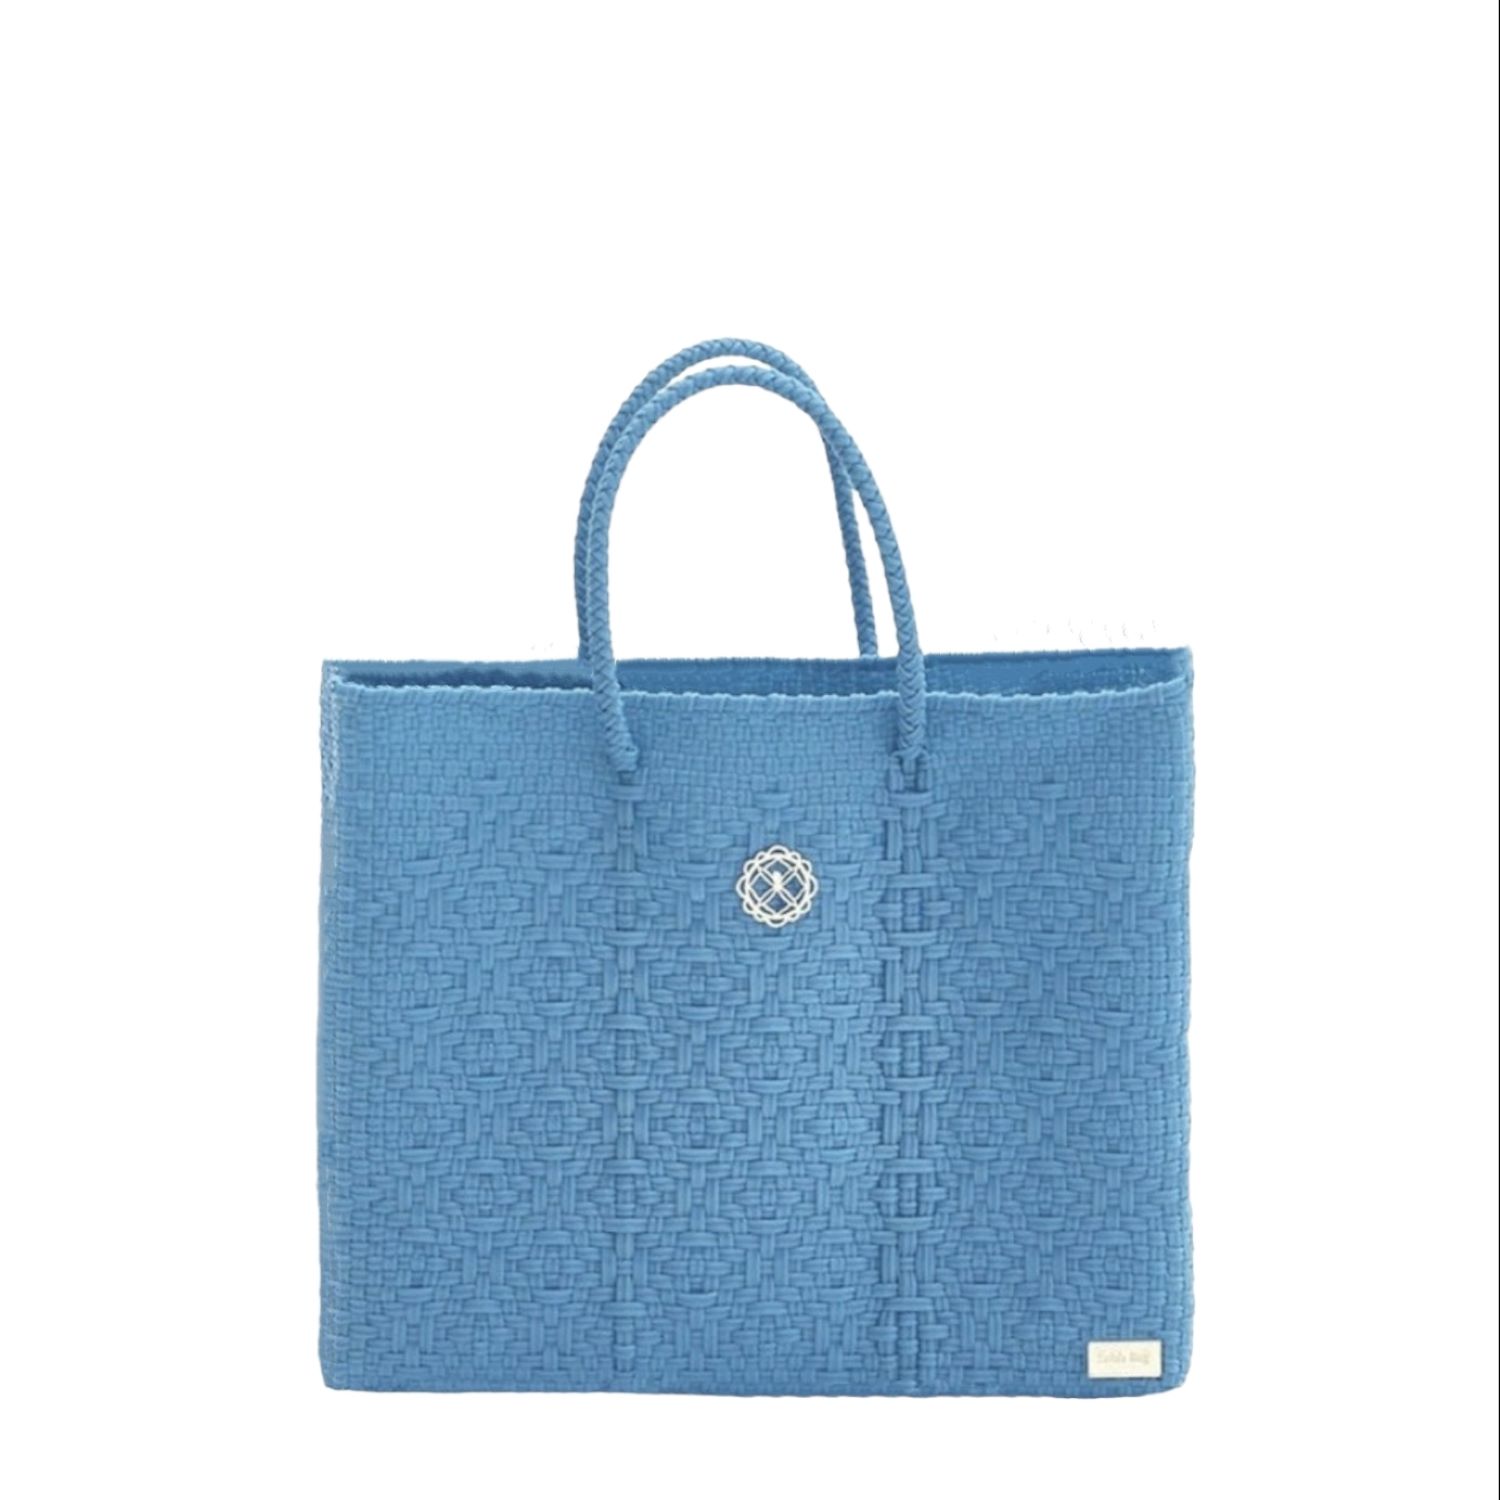 Women’s Small Light Blue Tote Bag Lolas Bag